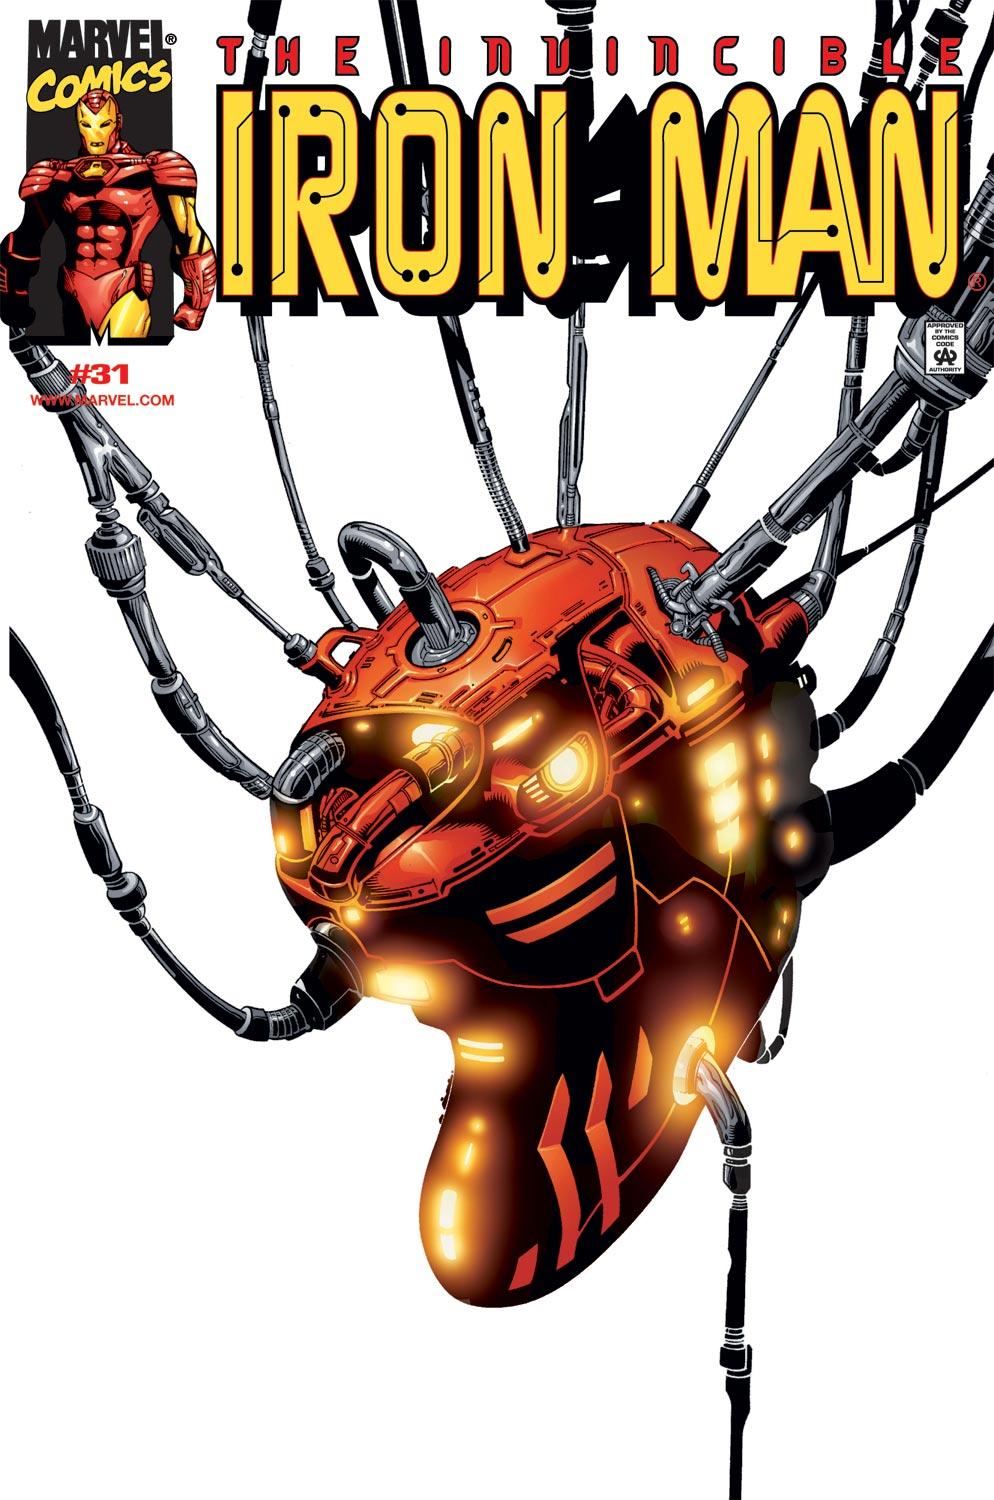 IRON MAN #31#32 - MARVEL COMICS (2000)